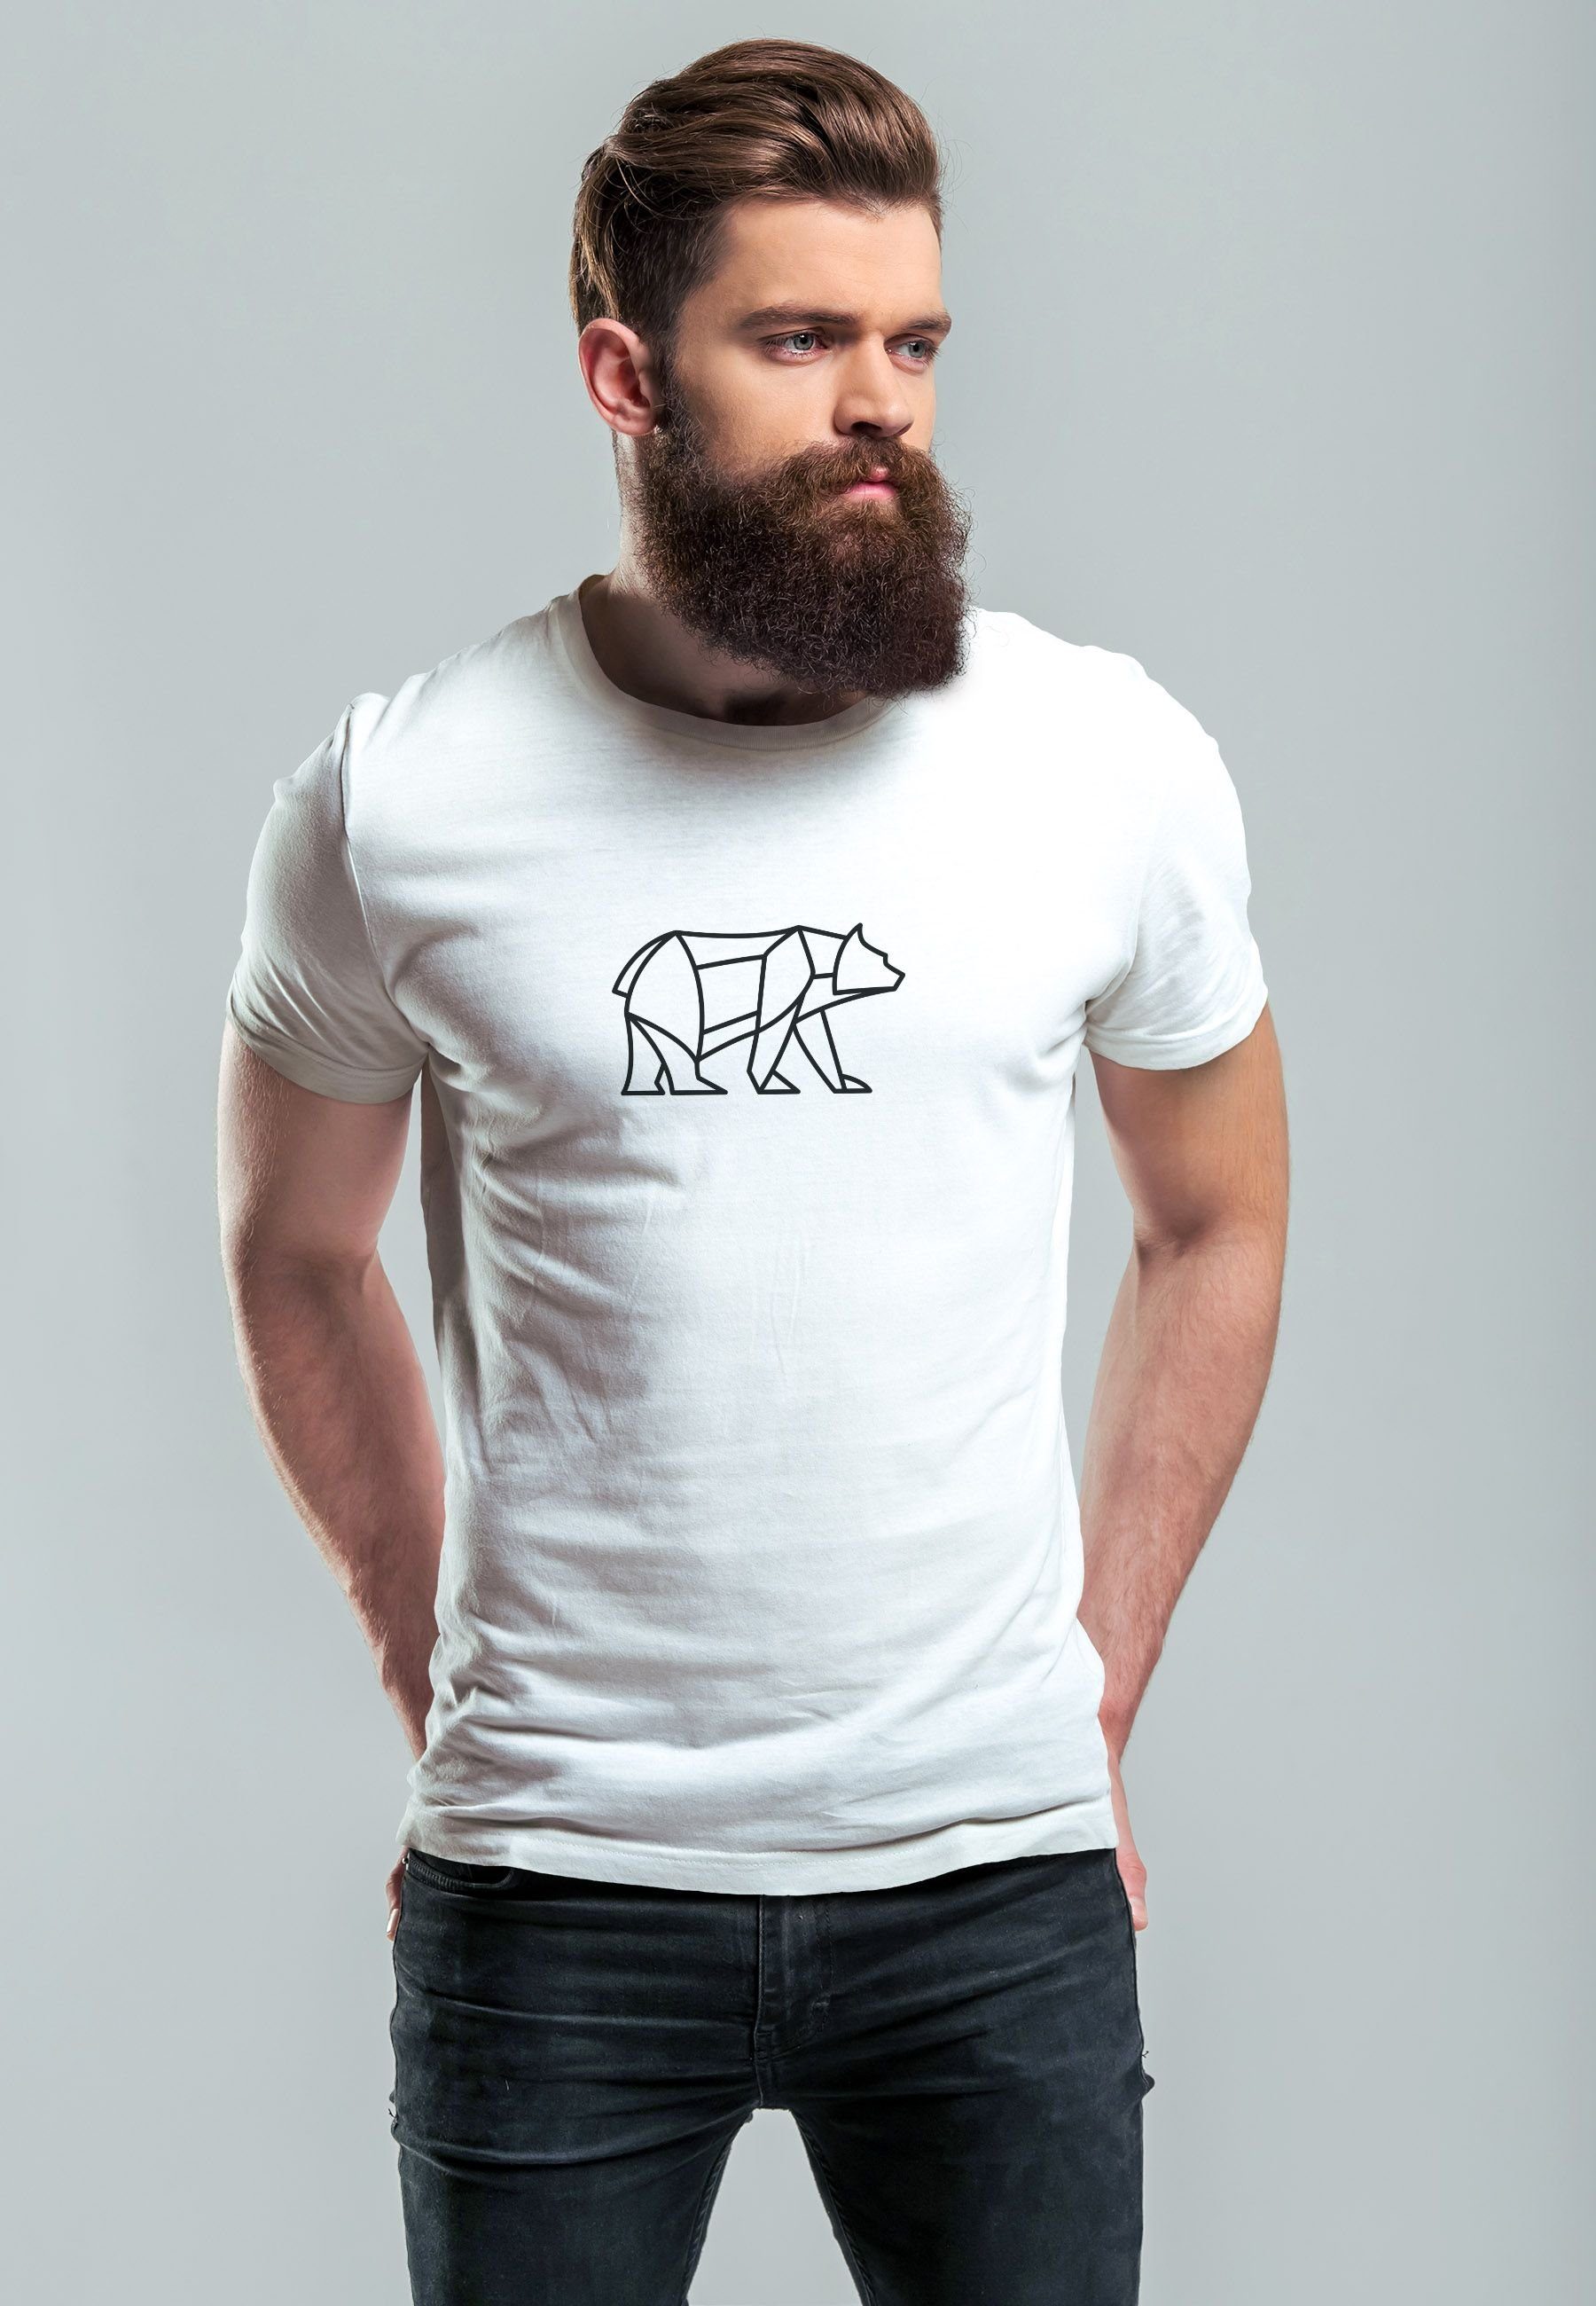 Outdoor Polygon Tiermotiv Bär mit Design Neverless Print-Shirt Polygon Bear 2 Herren Print T-Shirt weiß Print Fashion